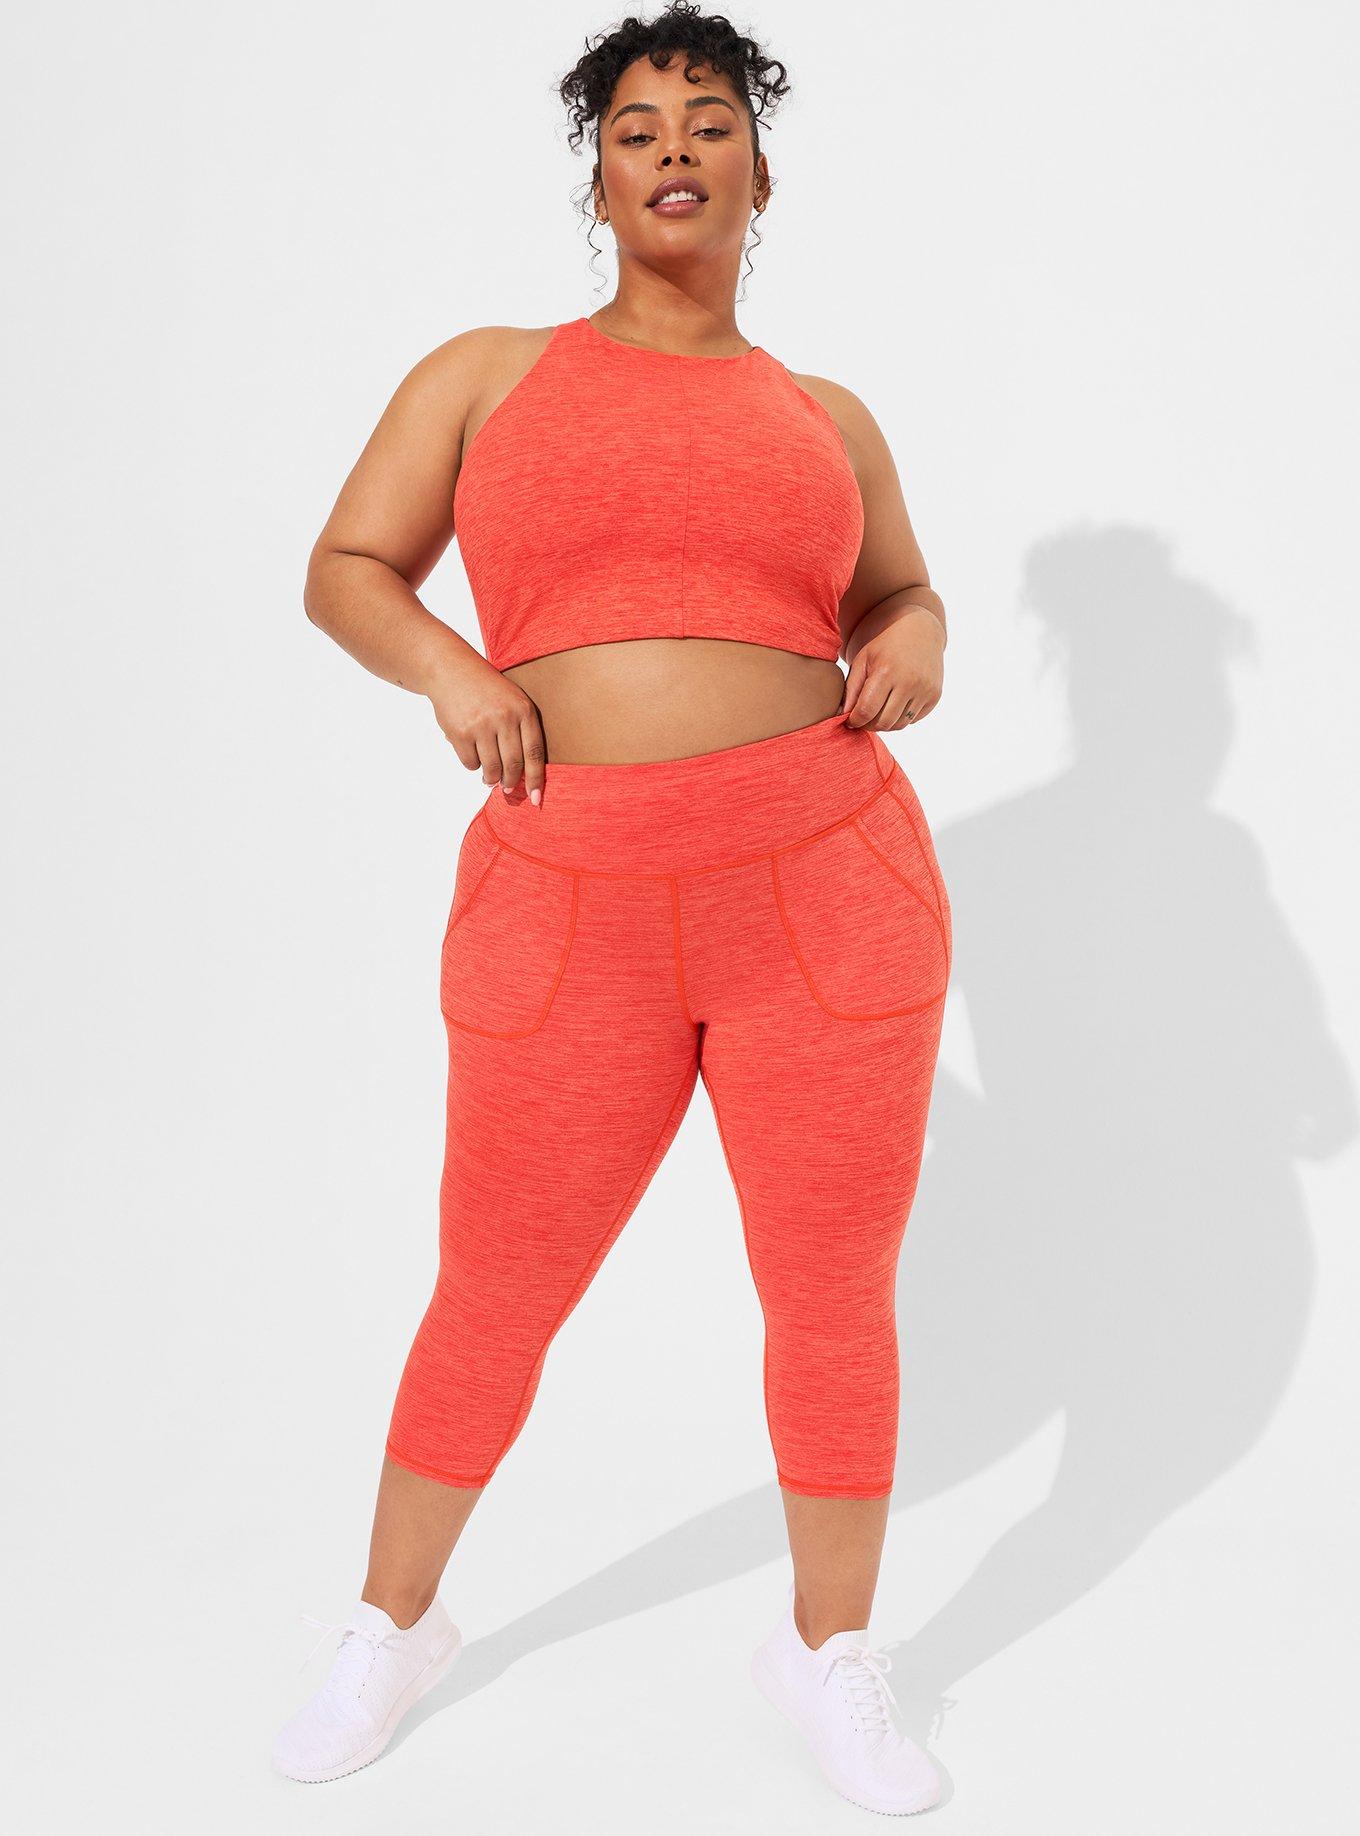 Tangerine Women's Activewear Zip Up Thick Pockets Size Medium Pink Jacket